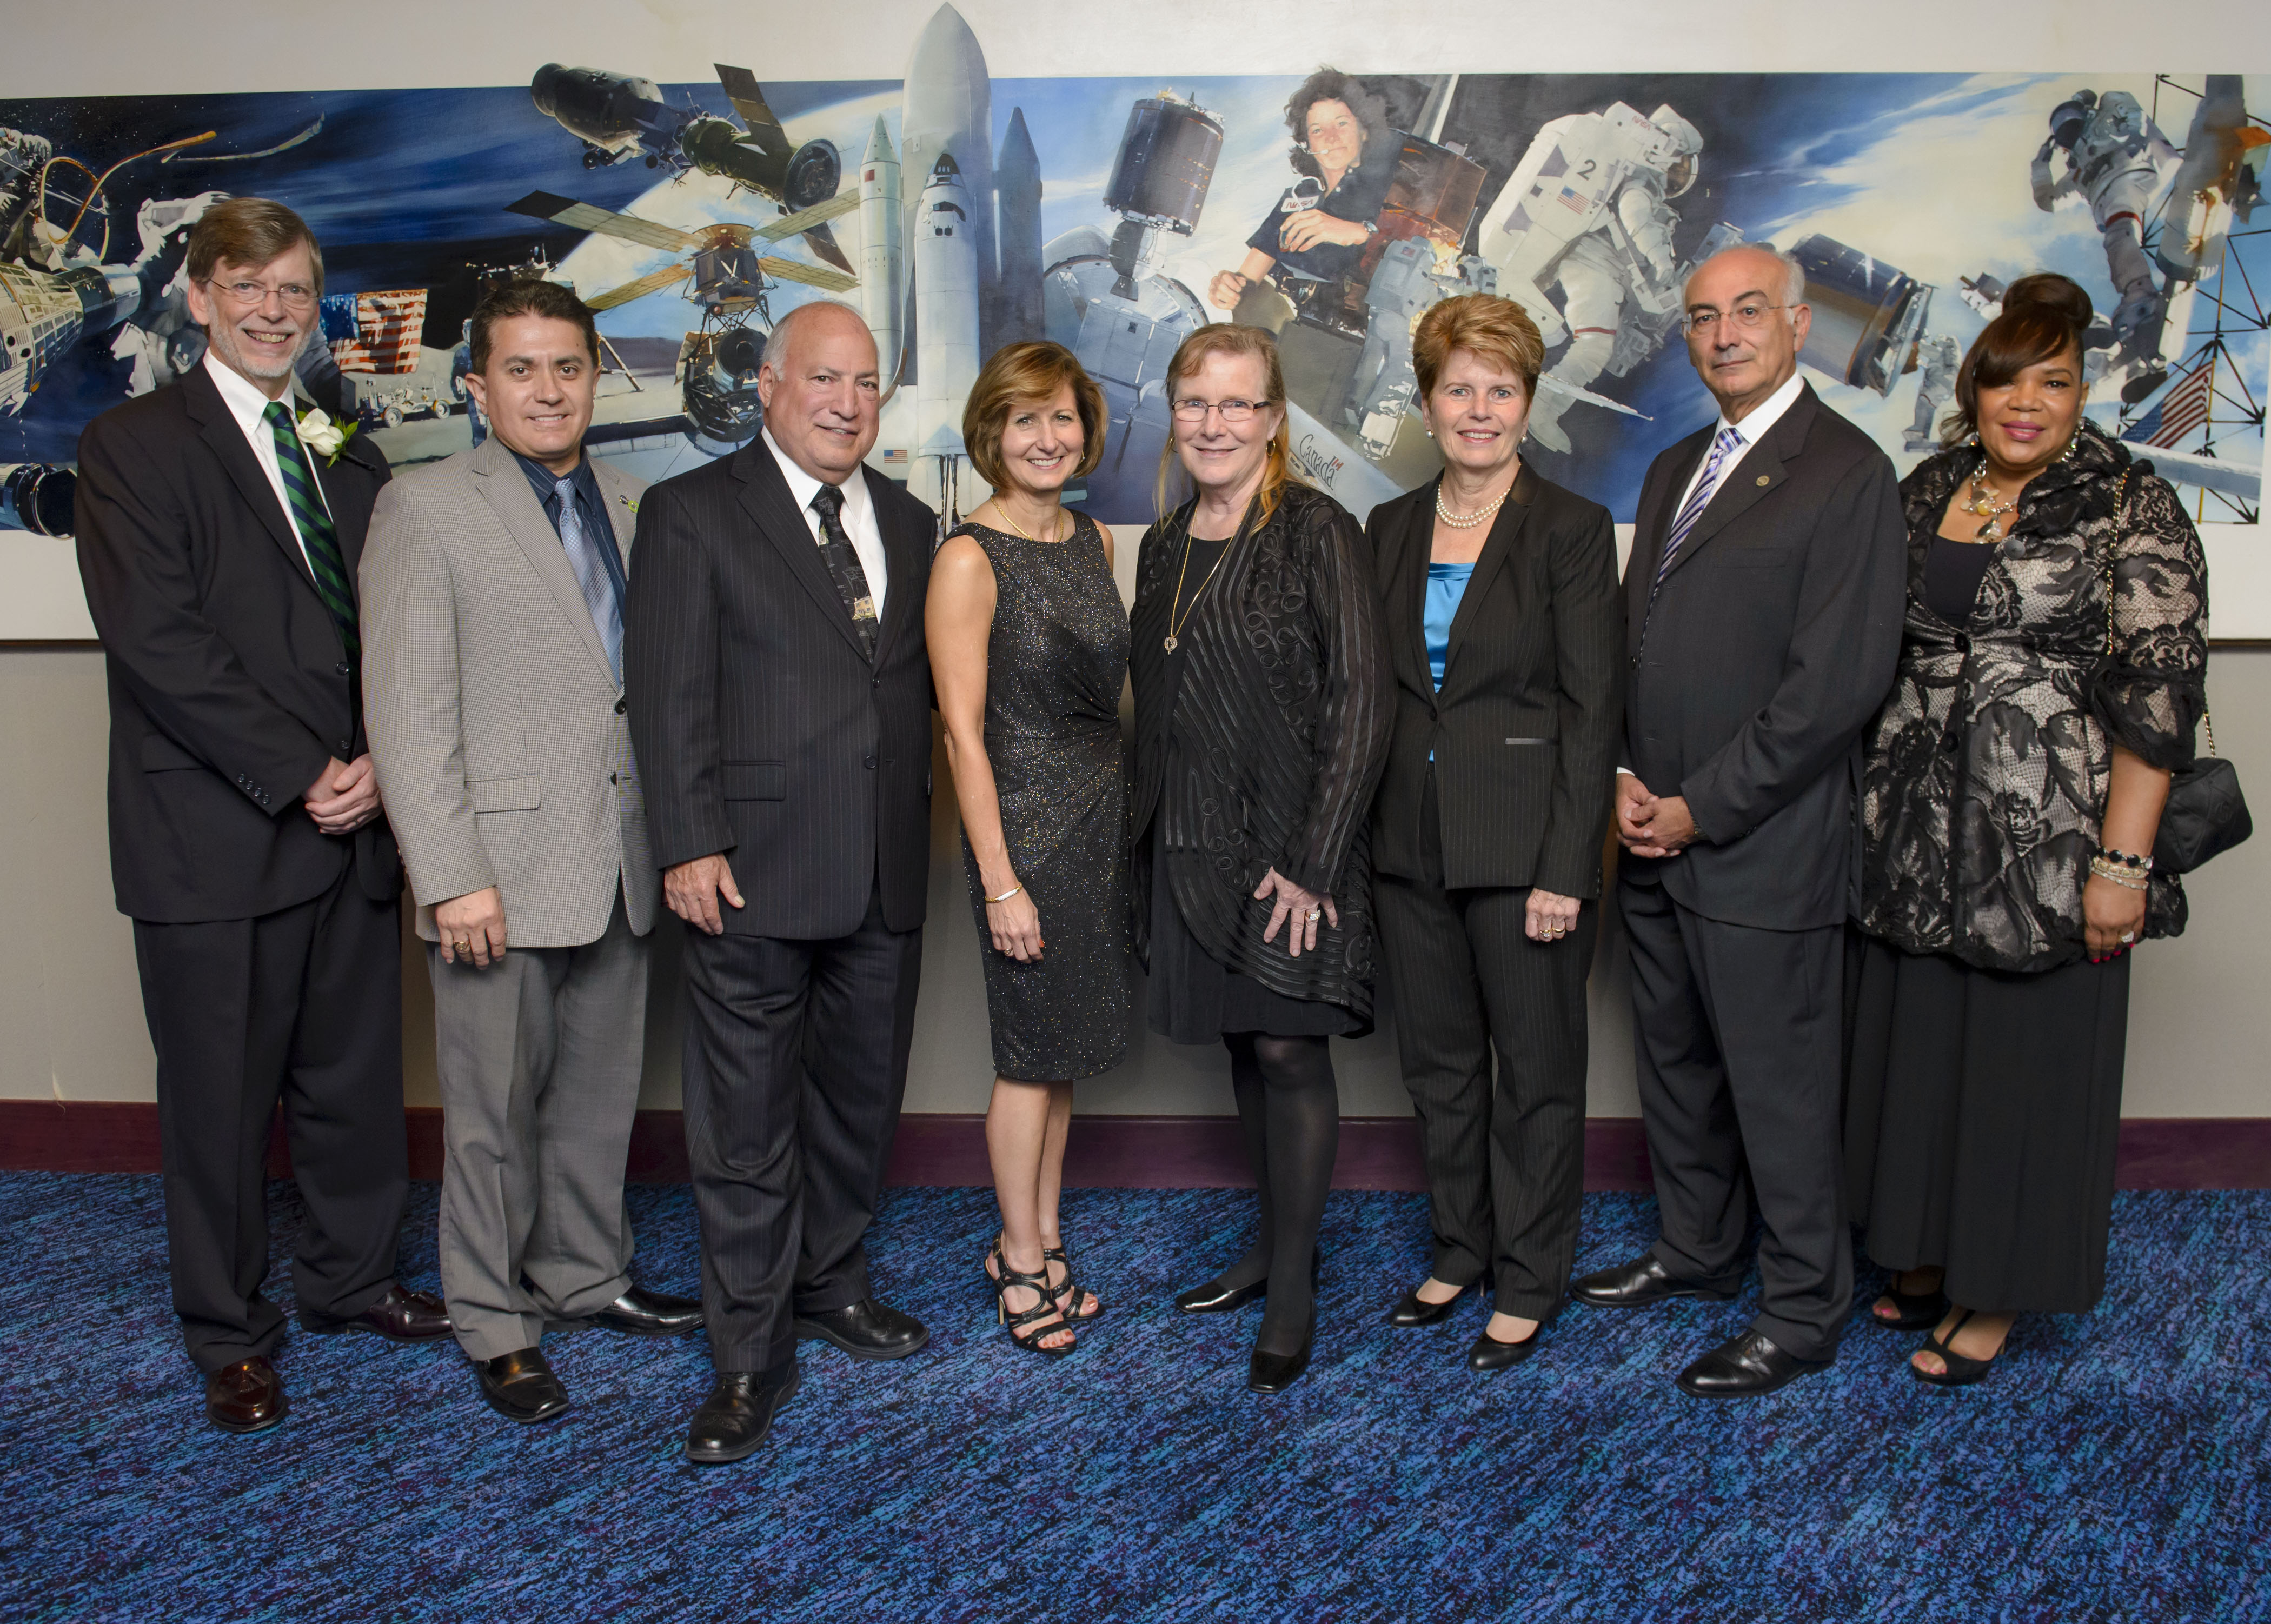 Photo: Past and present distinguished alumni at the 2014 Alumni Celebration.